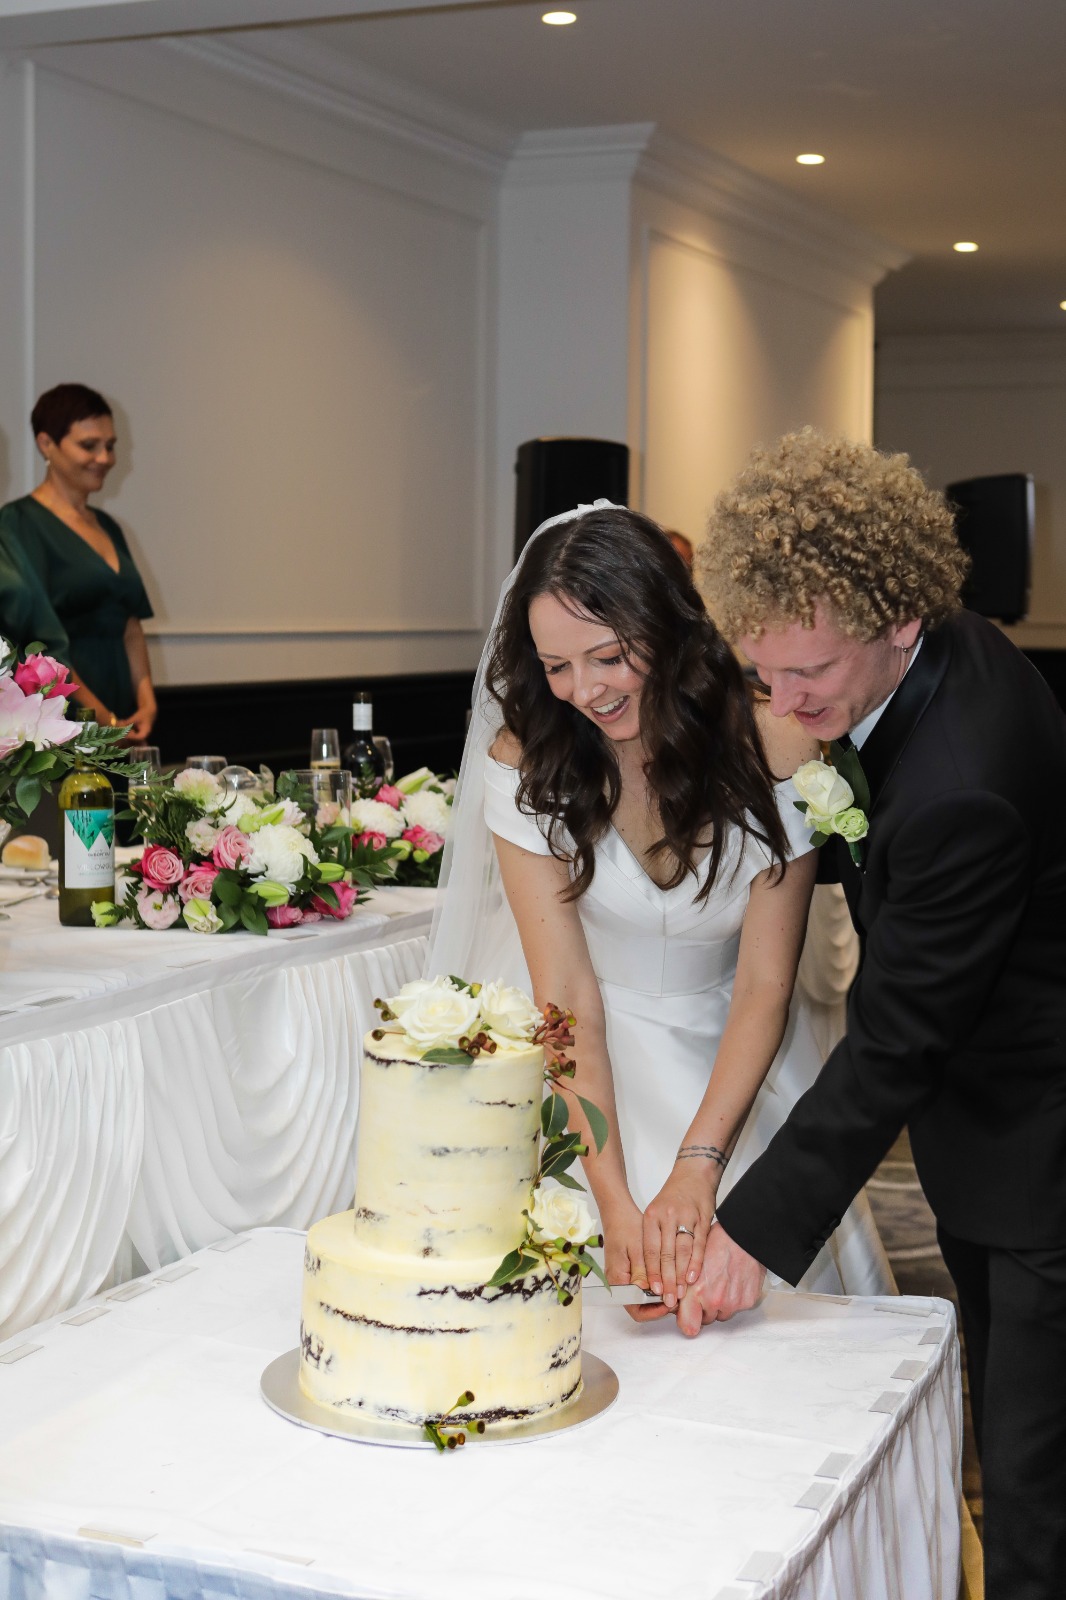 Wedding cake cutting - Bellevue Receptions